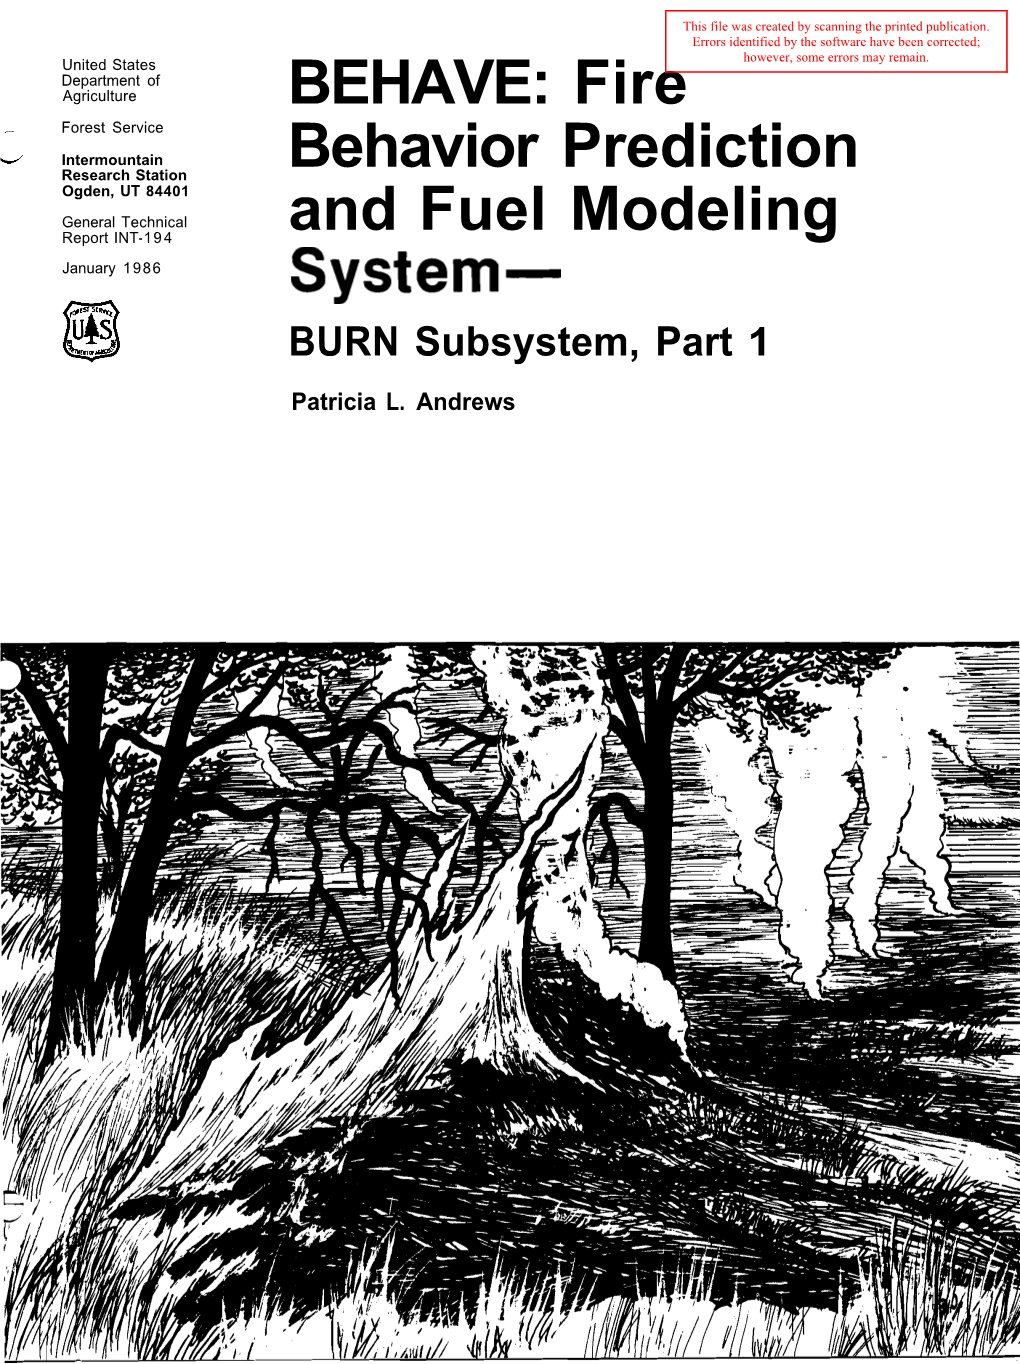 BEHAVE: Fire Behavior Prediction and Fuel Modeling System- BURN Subsystem, Part 1